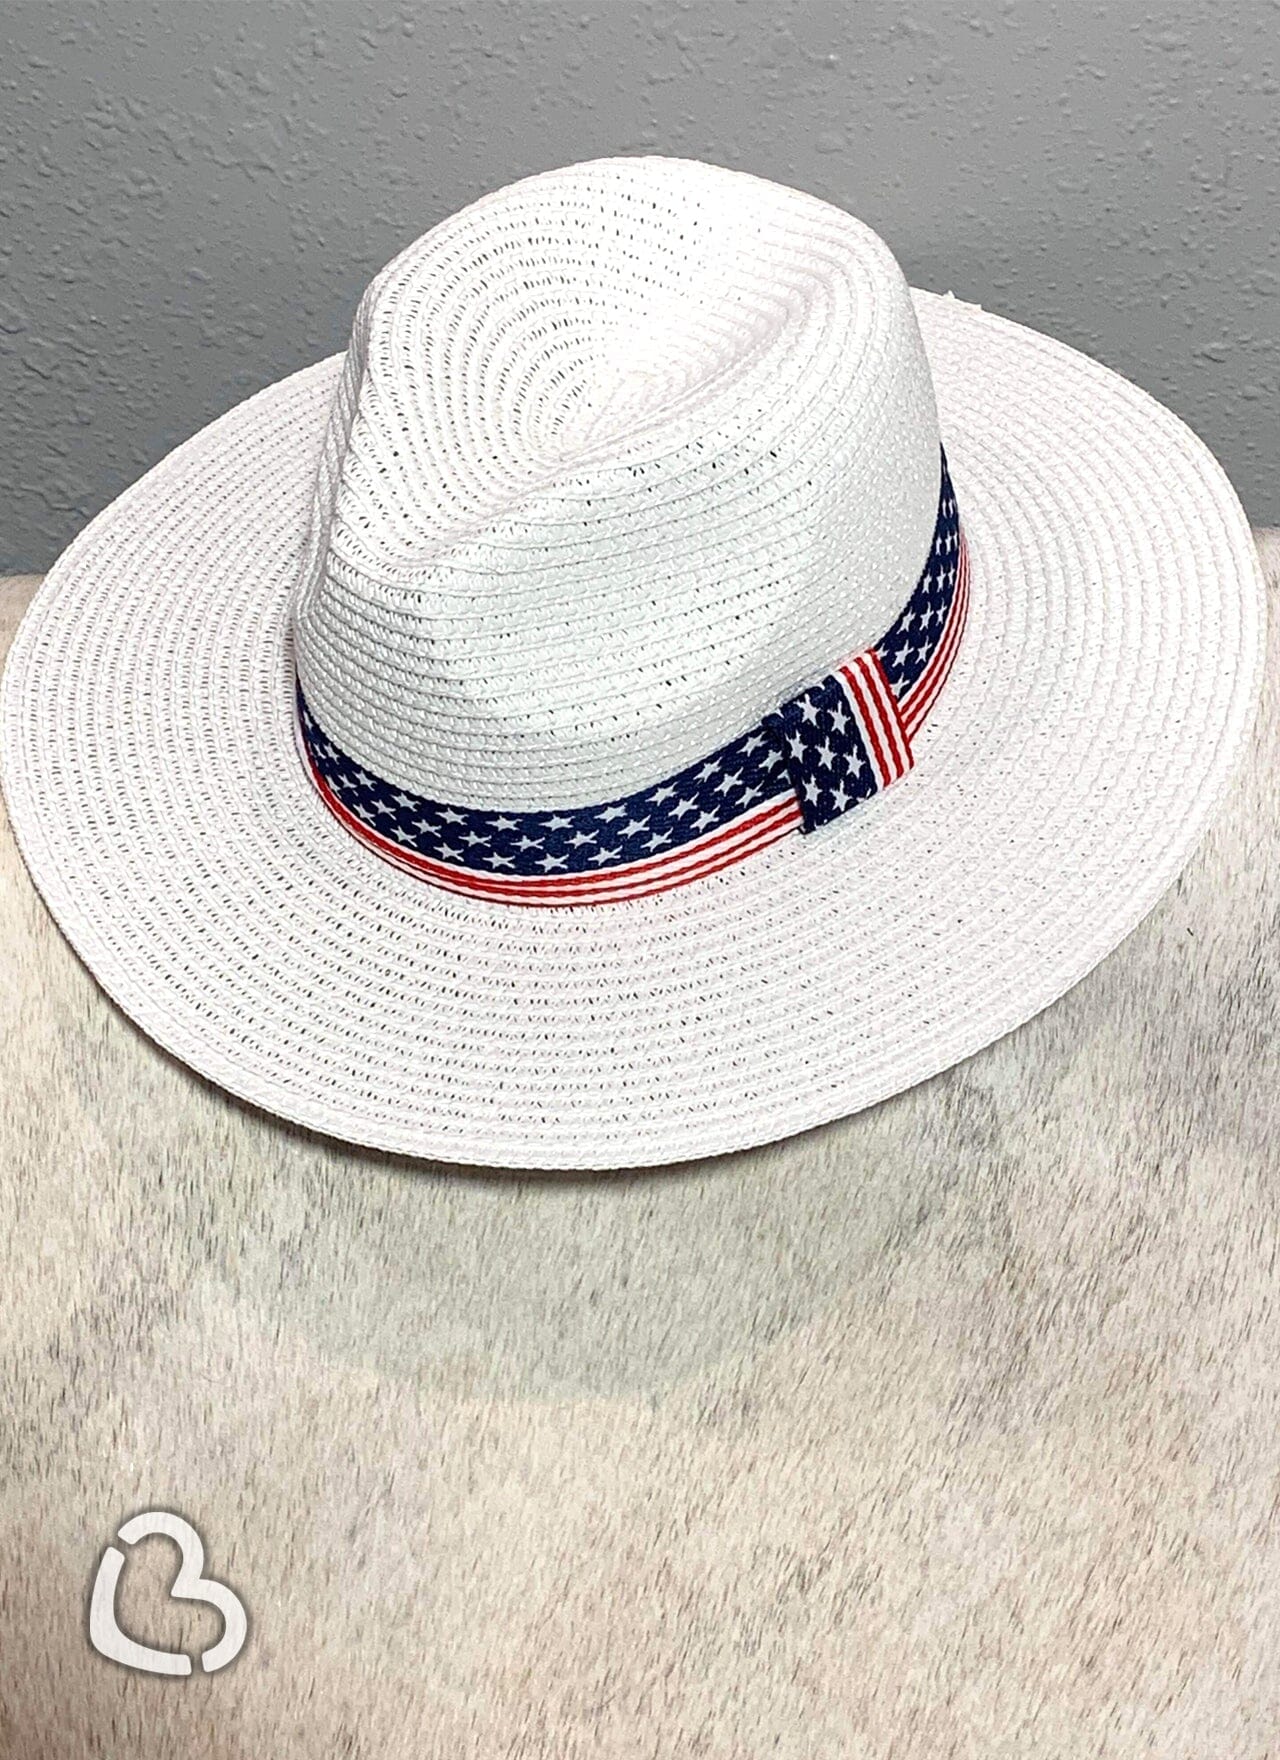 Stars and Stripes White Sun Hat Hat Cheekys Brand 